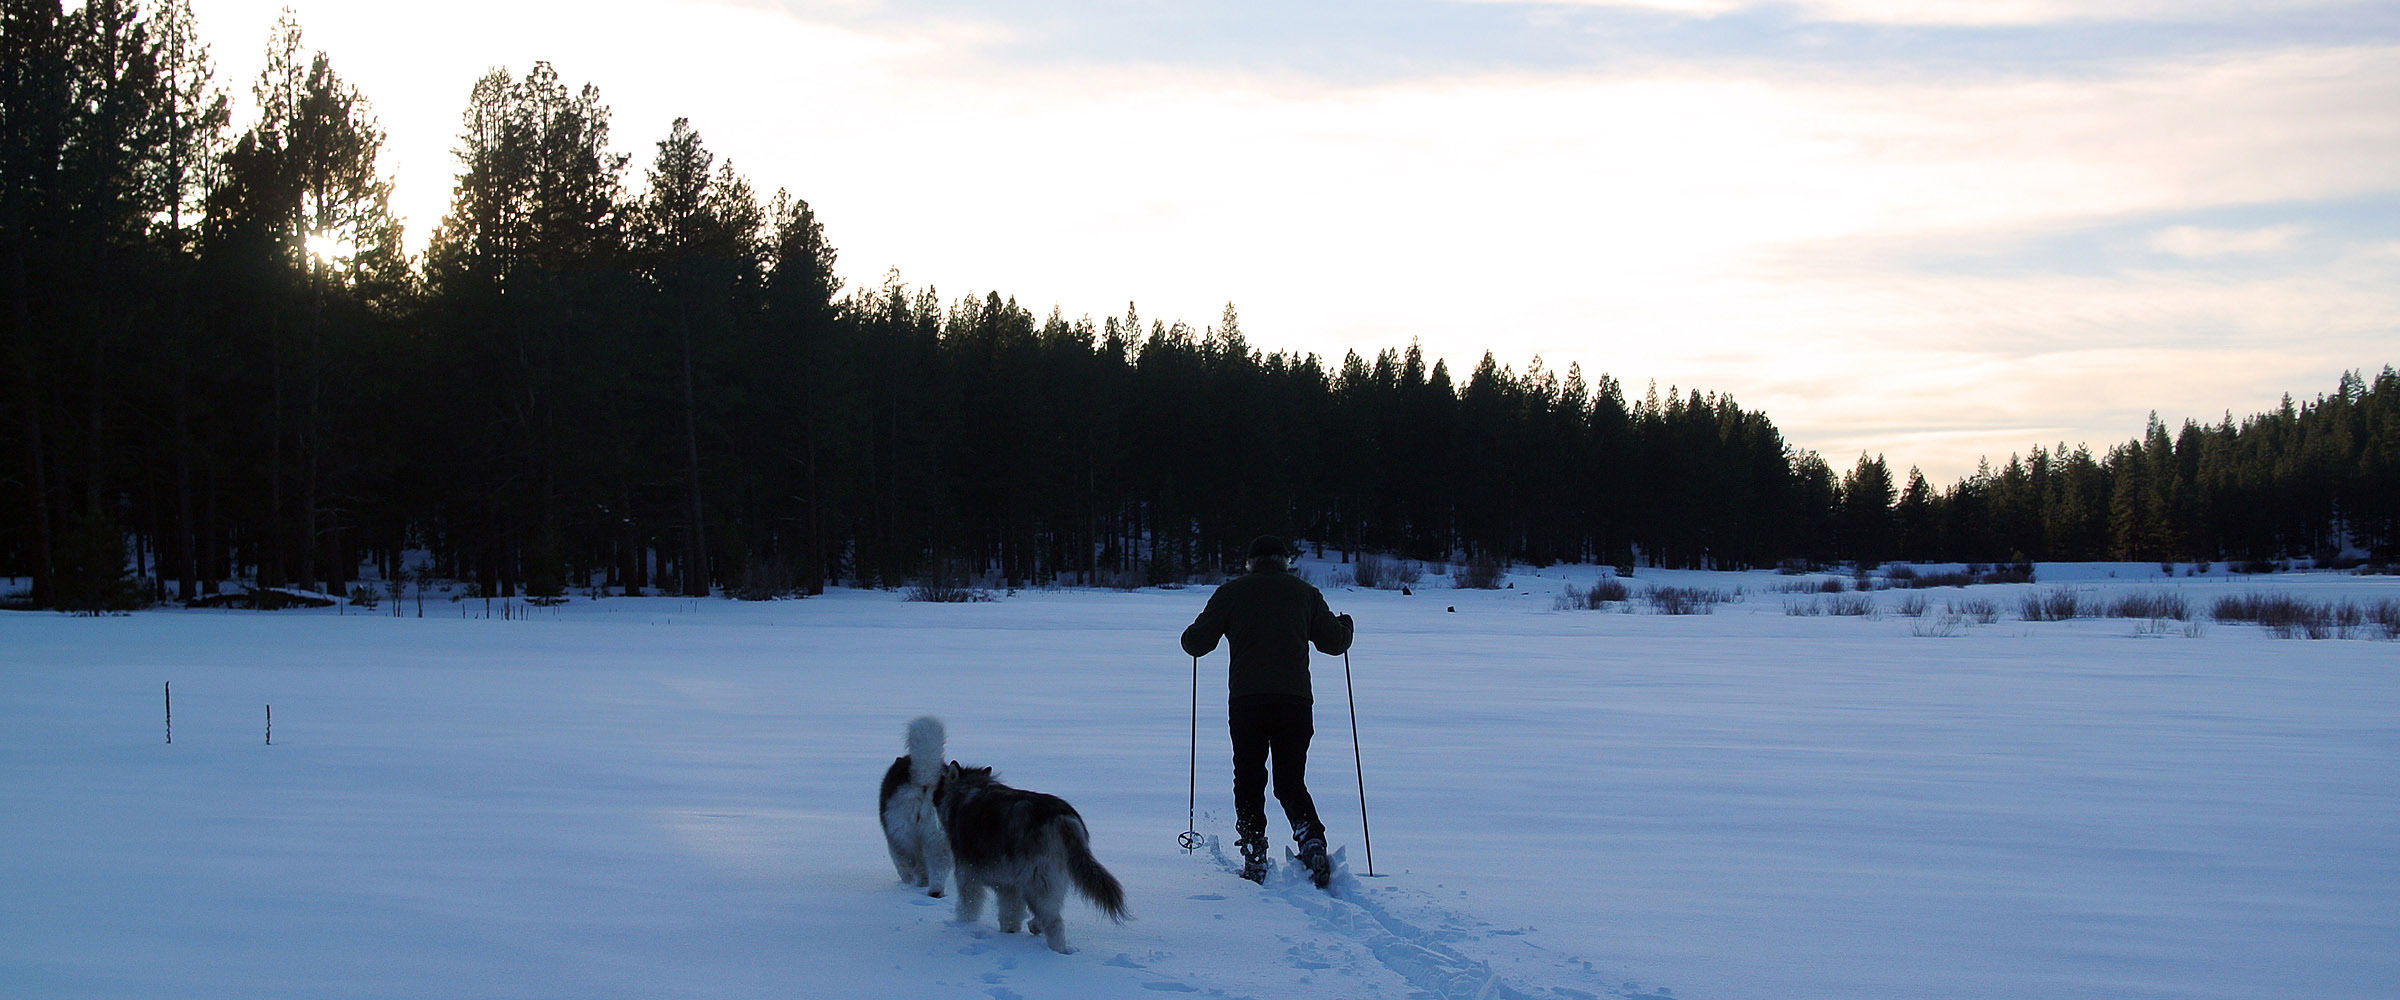 Skijorring, Alaskan Malamutes, Snowlion quality malamute puppies, family pets